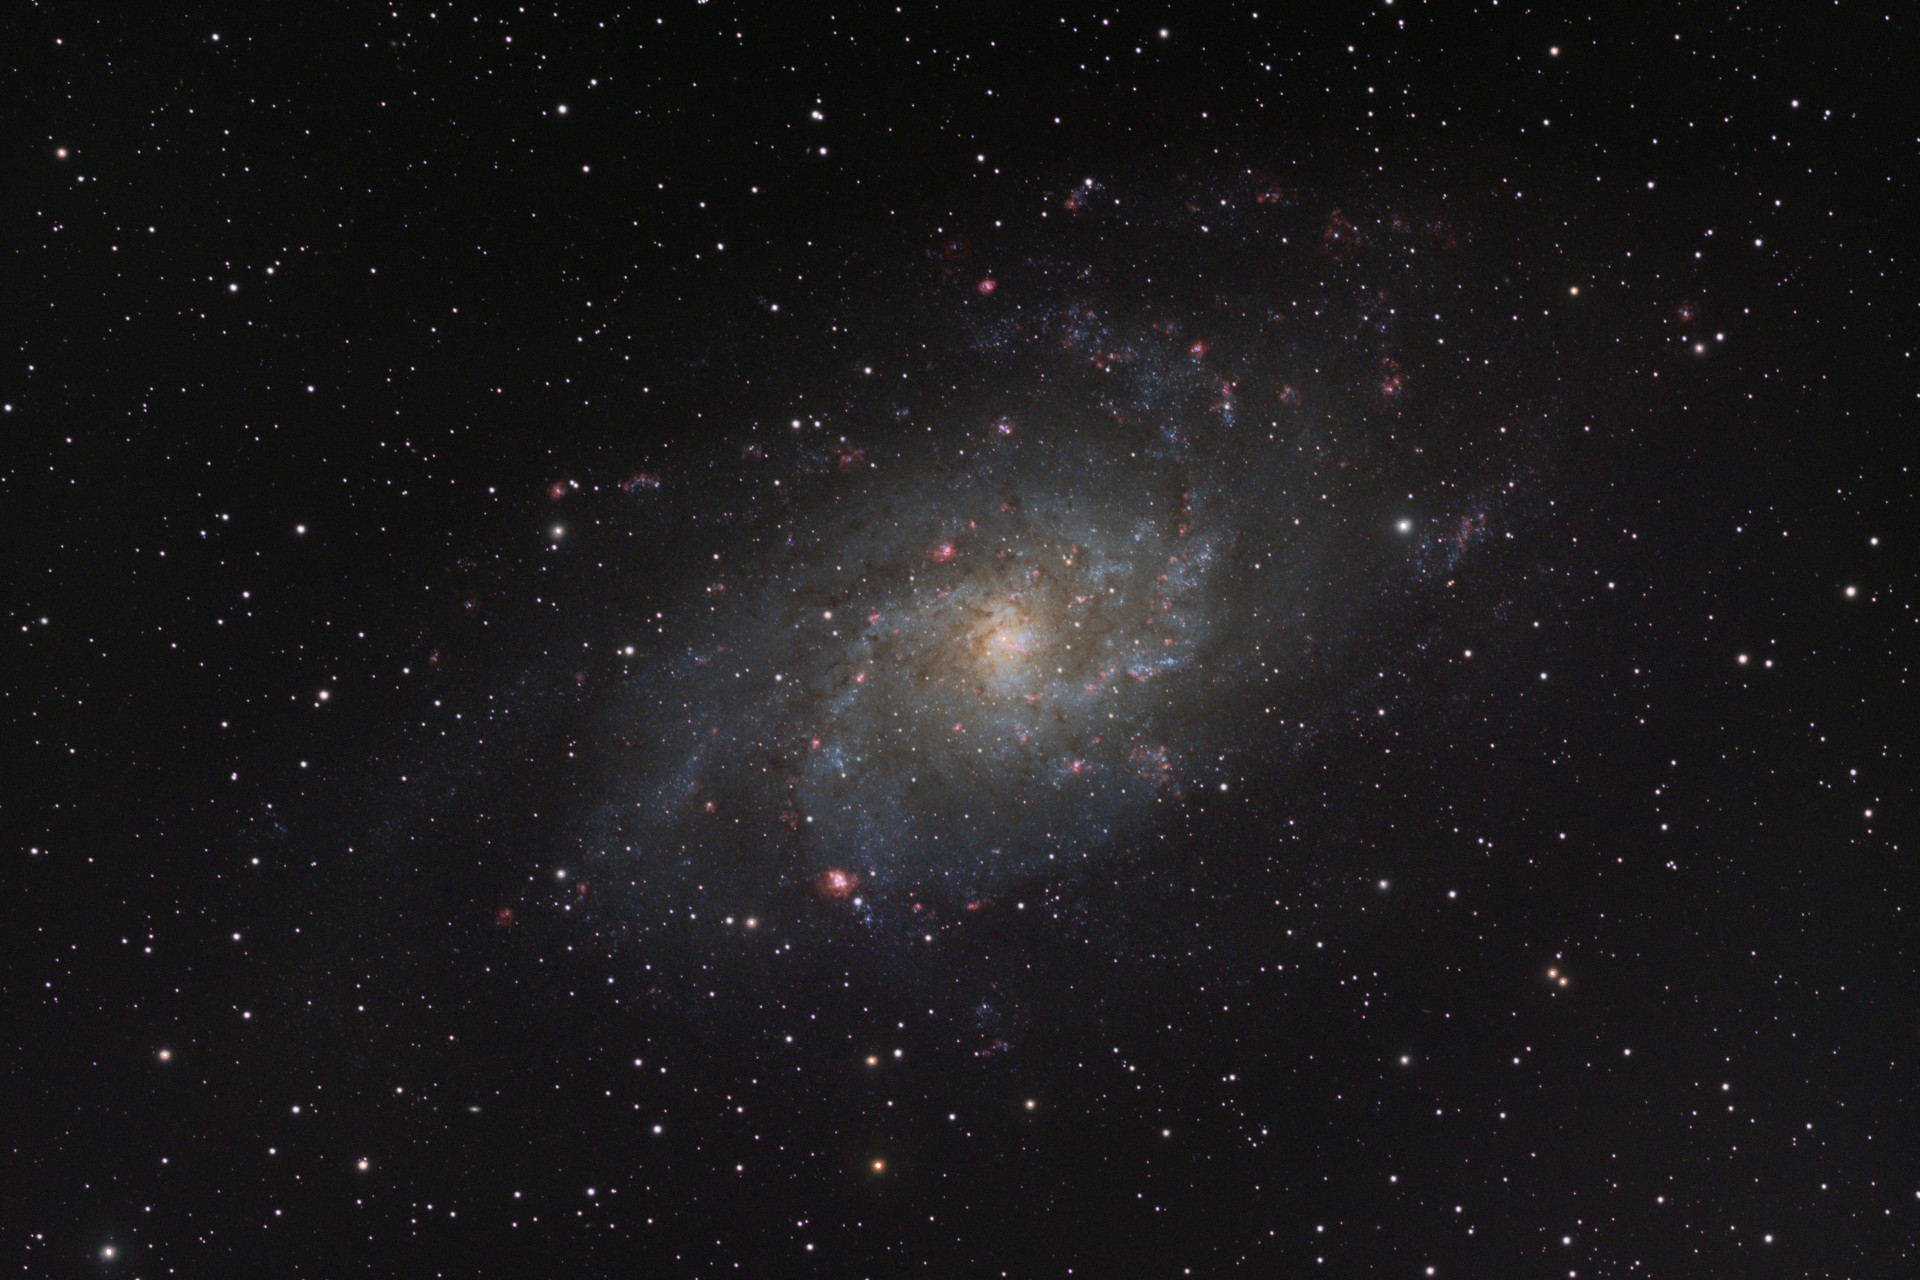 Messier 33 - Triangulum Galaxy